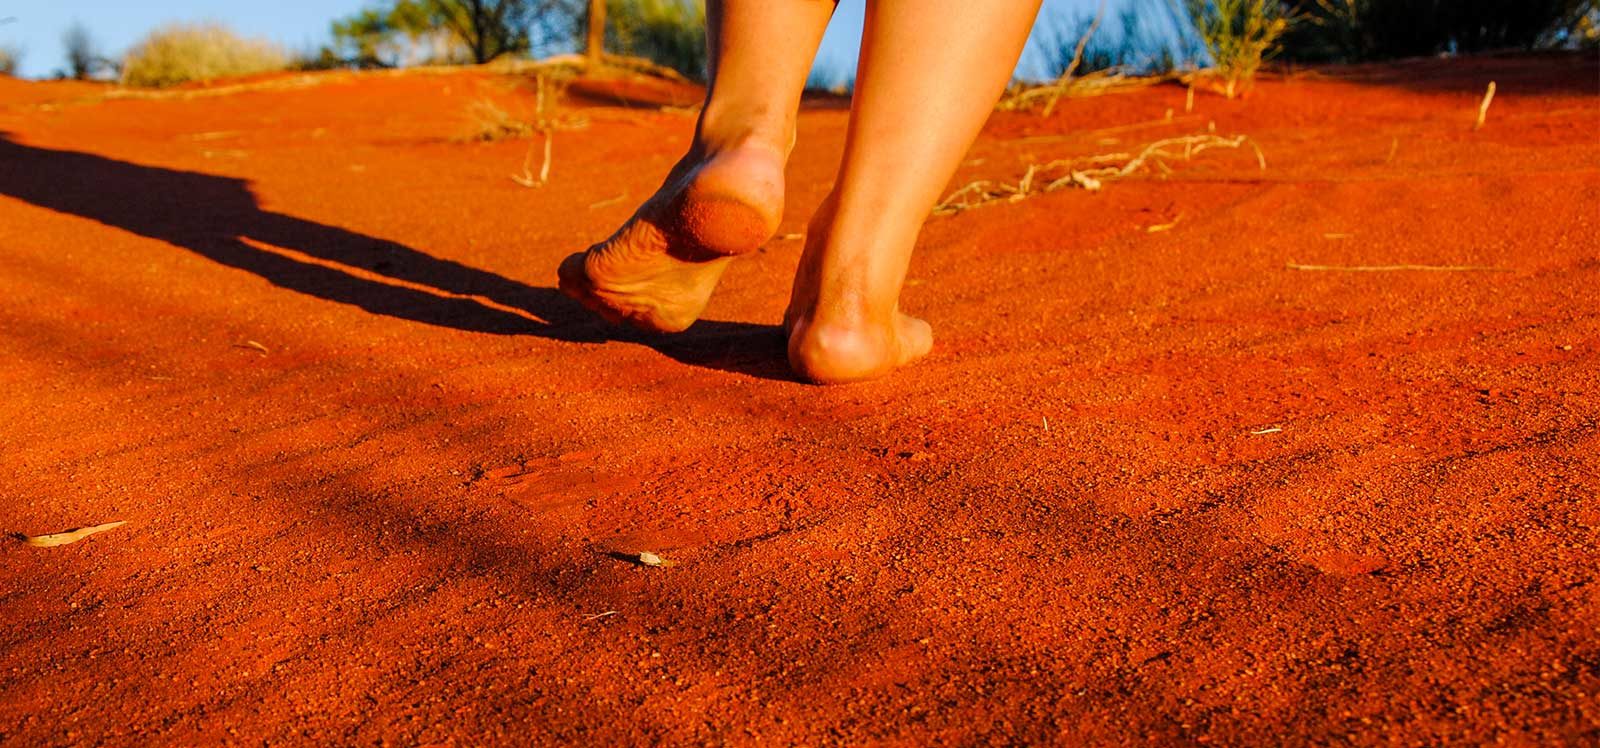 Walking barefoot on red sand dune